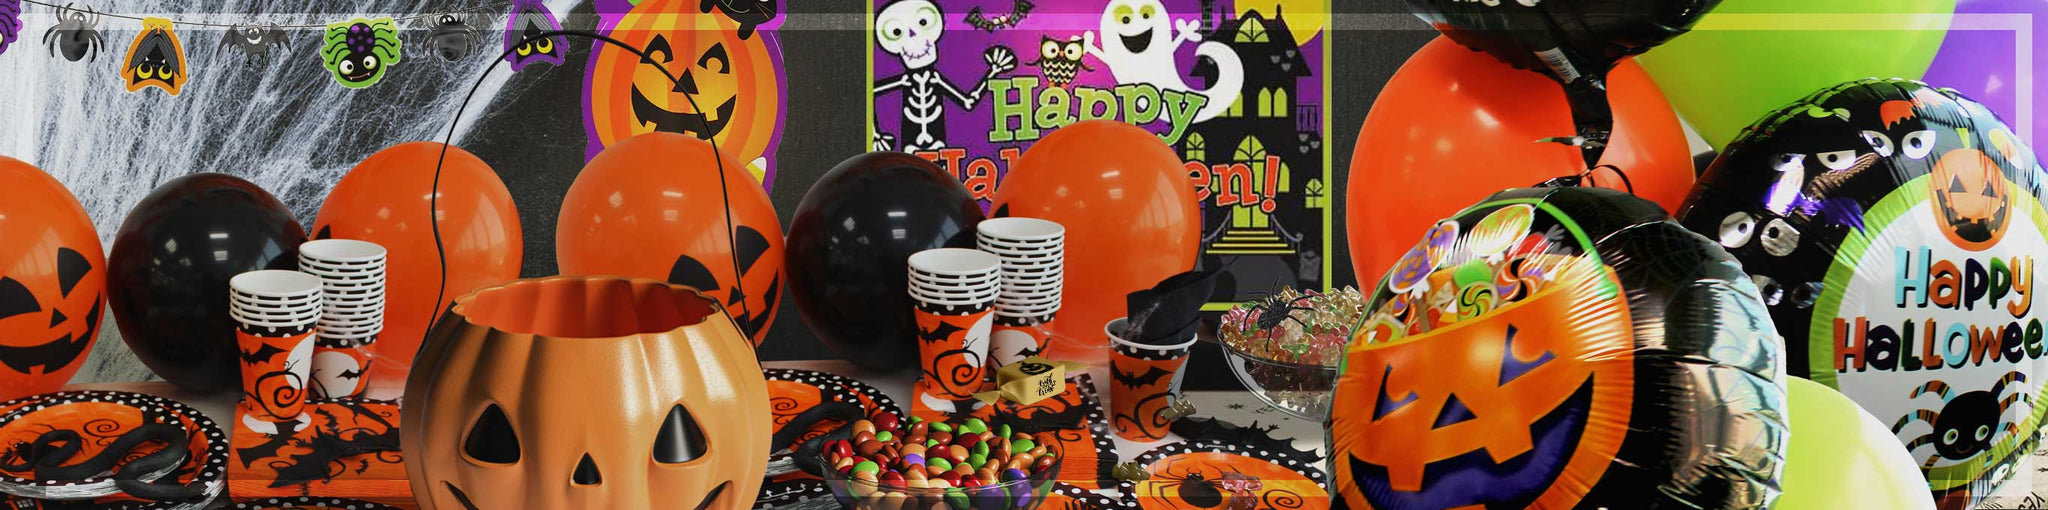 Halloween Table Decorations